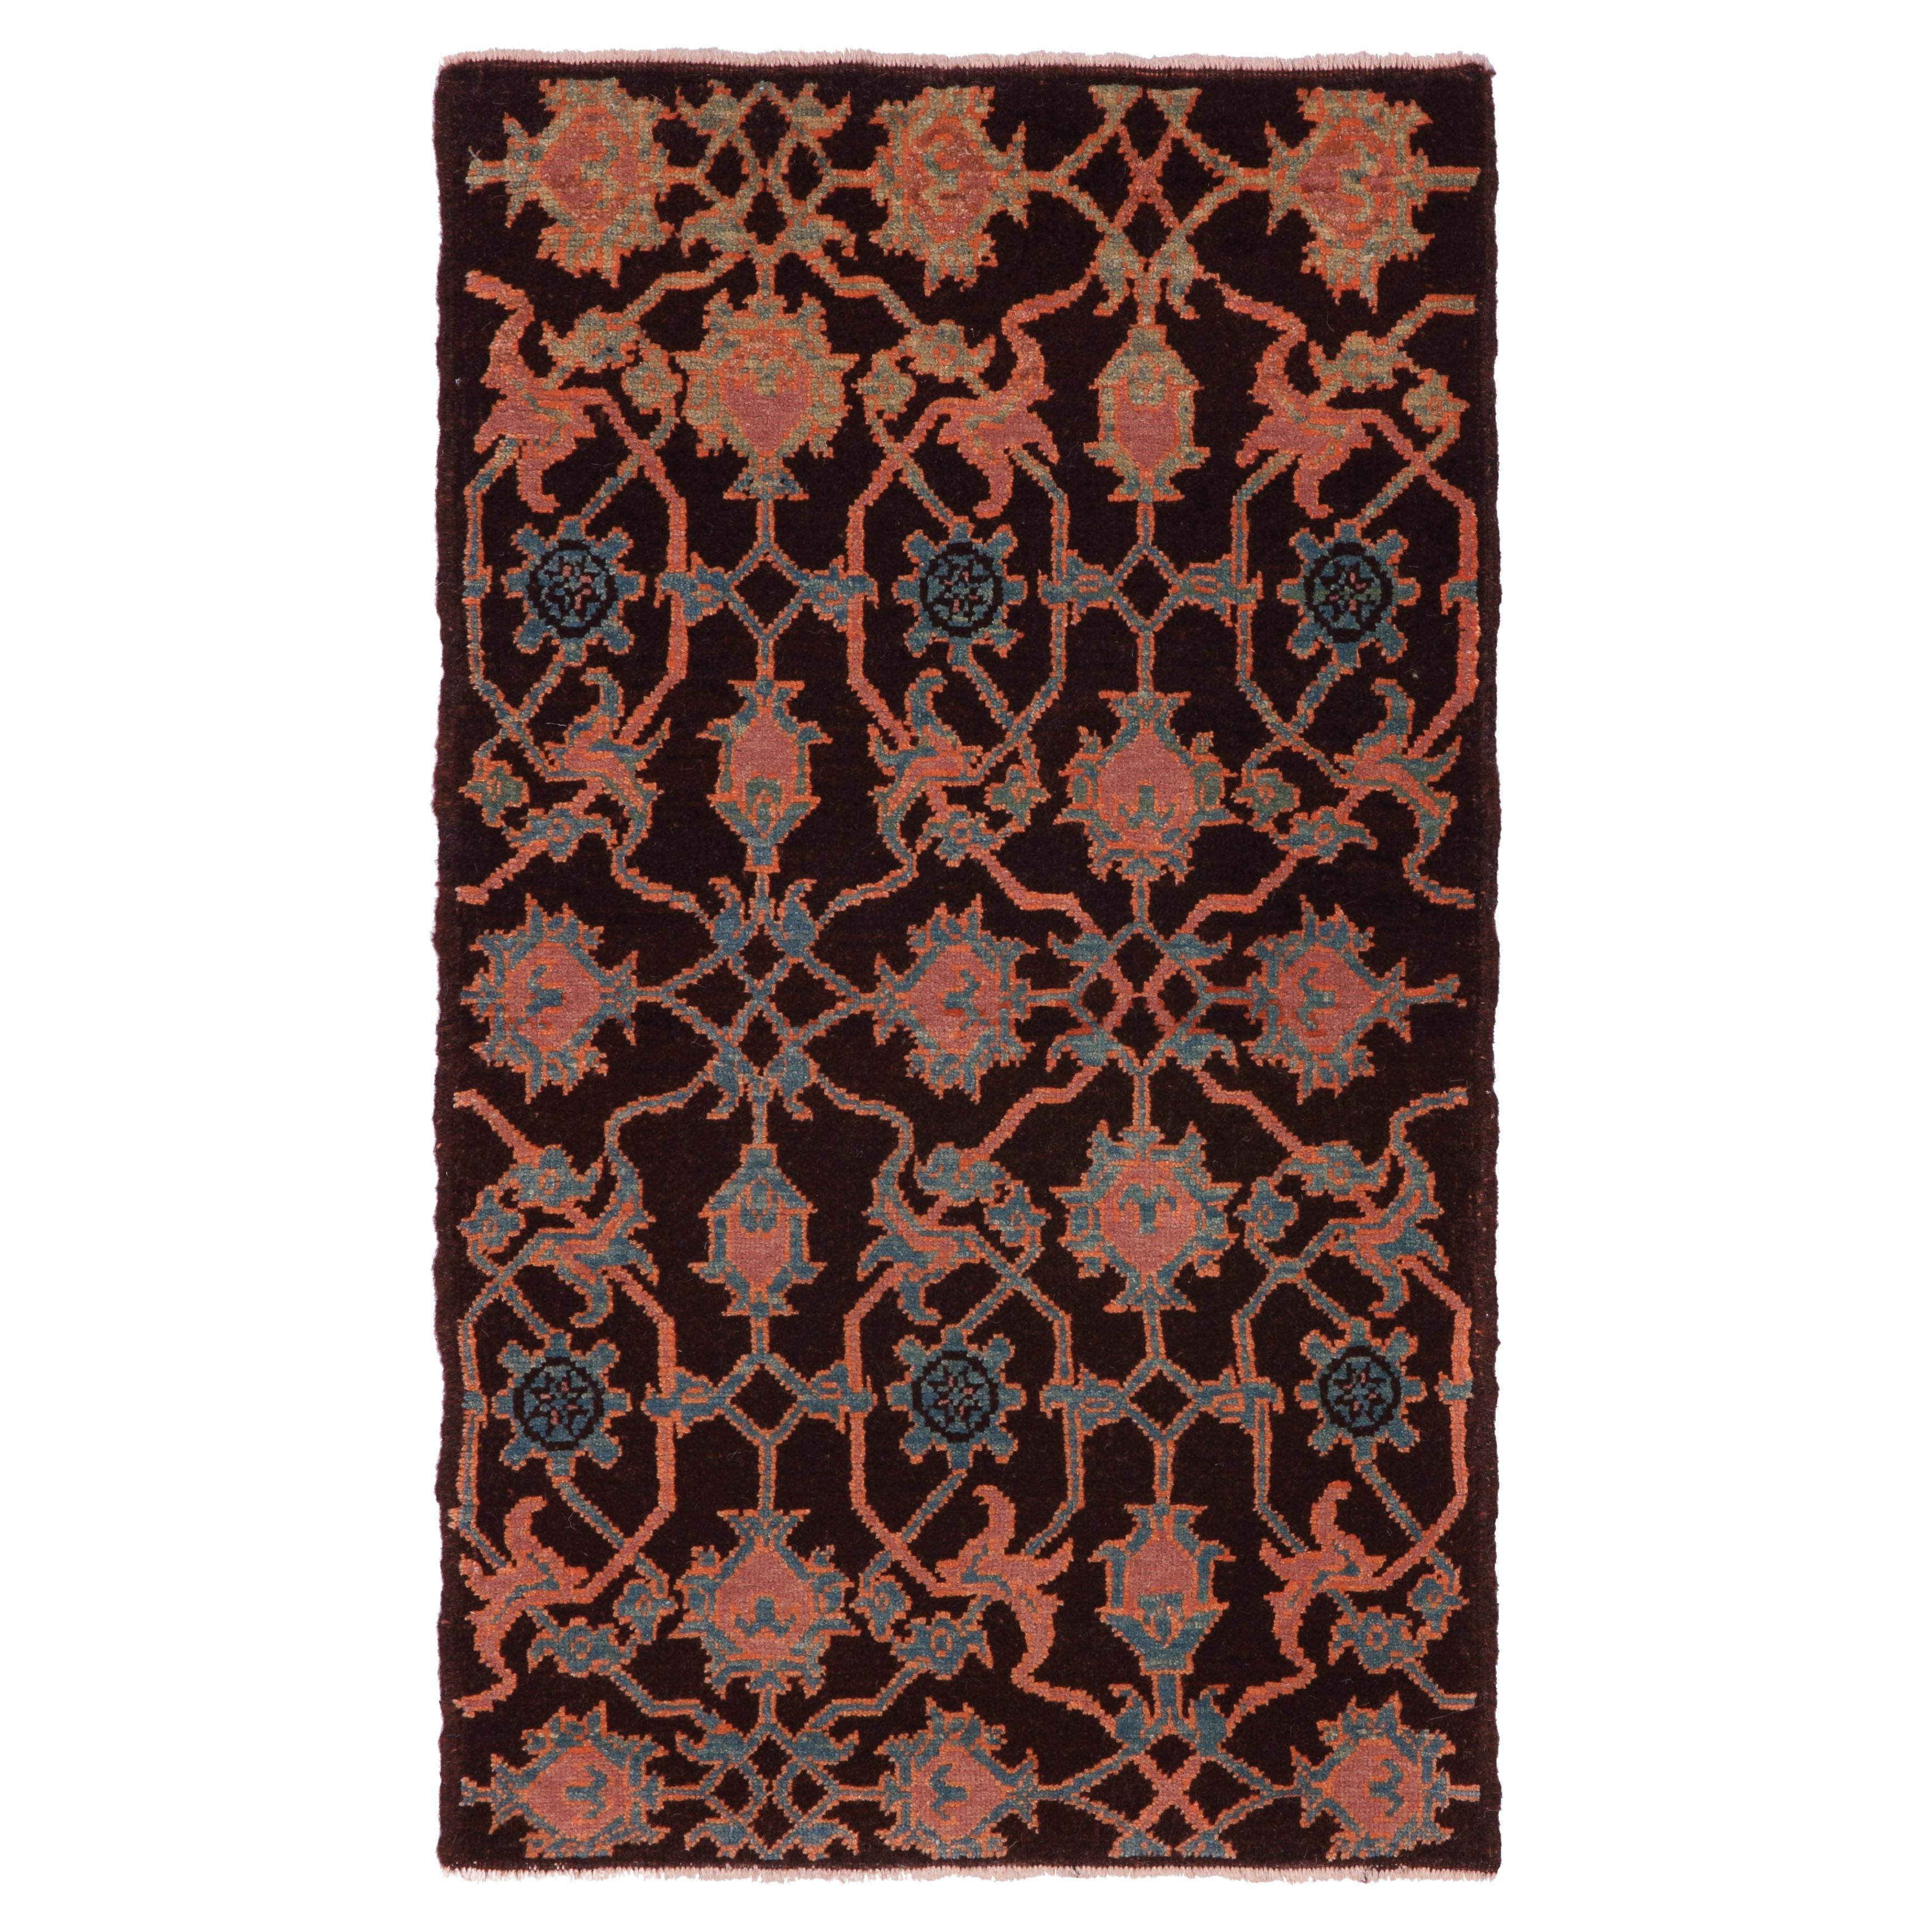 Ararat Rugs Mamluk Wagireh Rug with Palmette Lattice Revival Carpet Natural Dyed